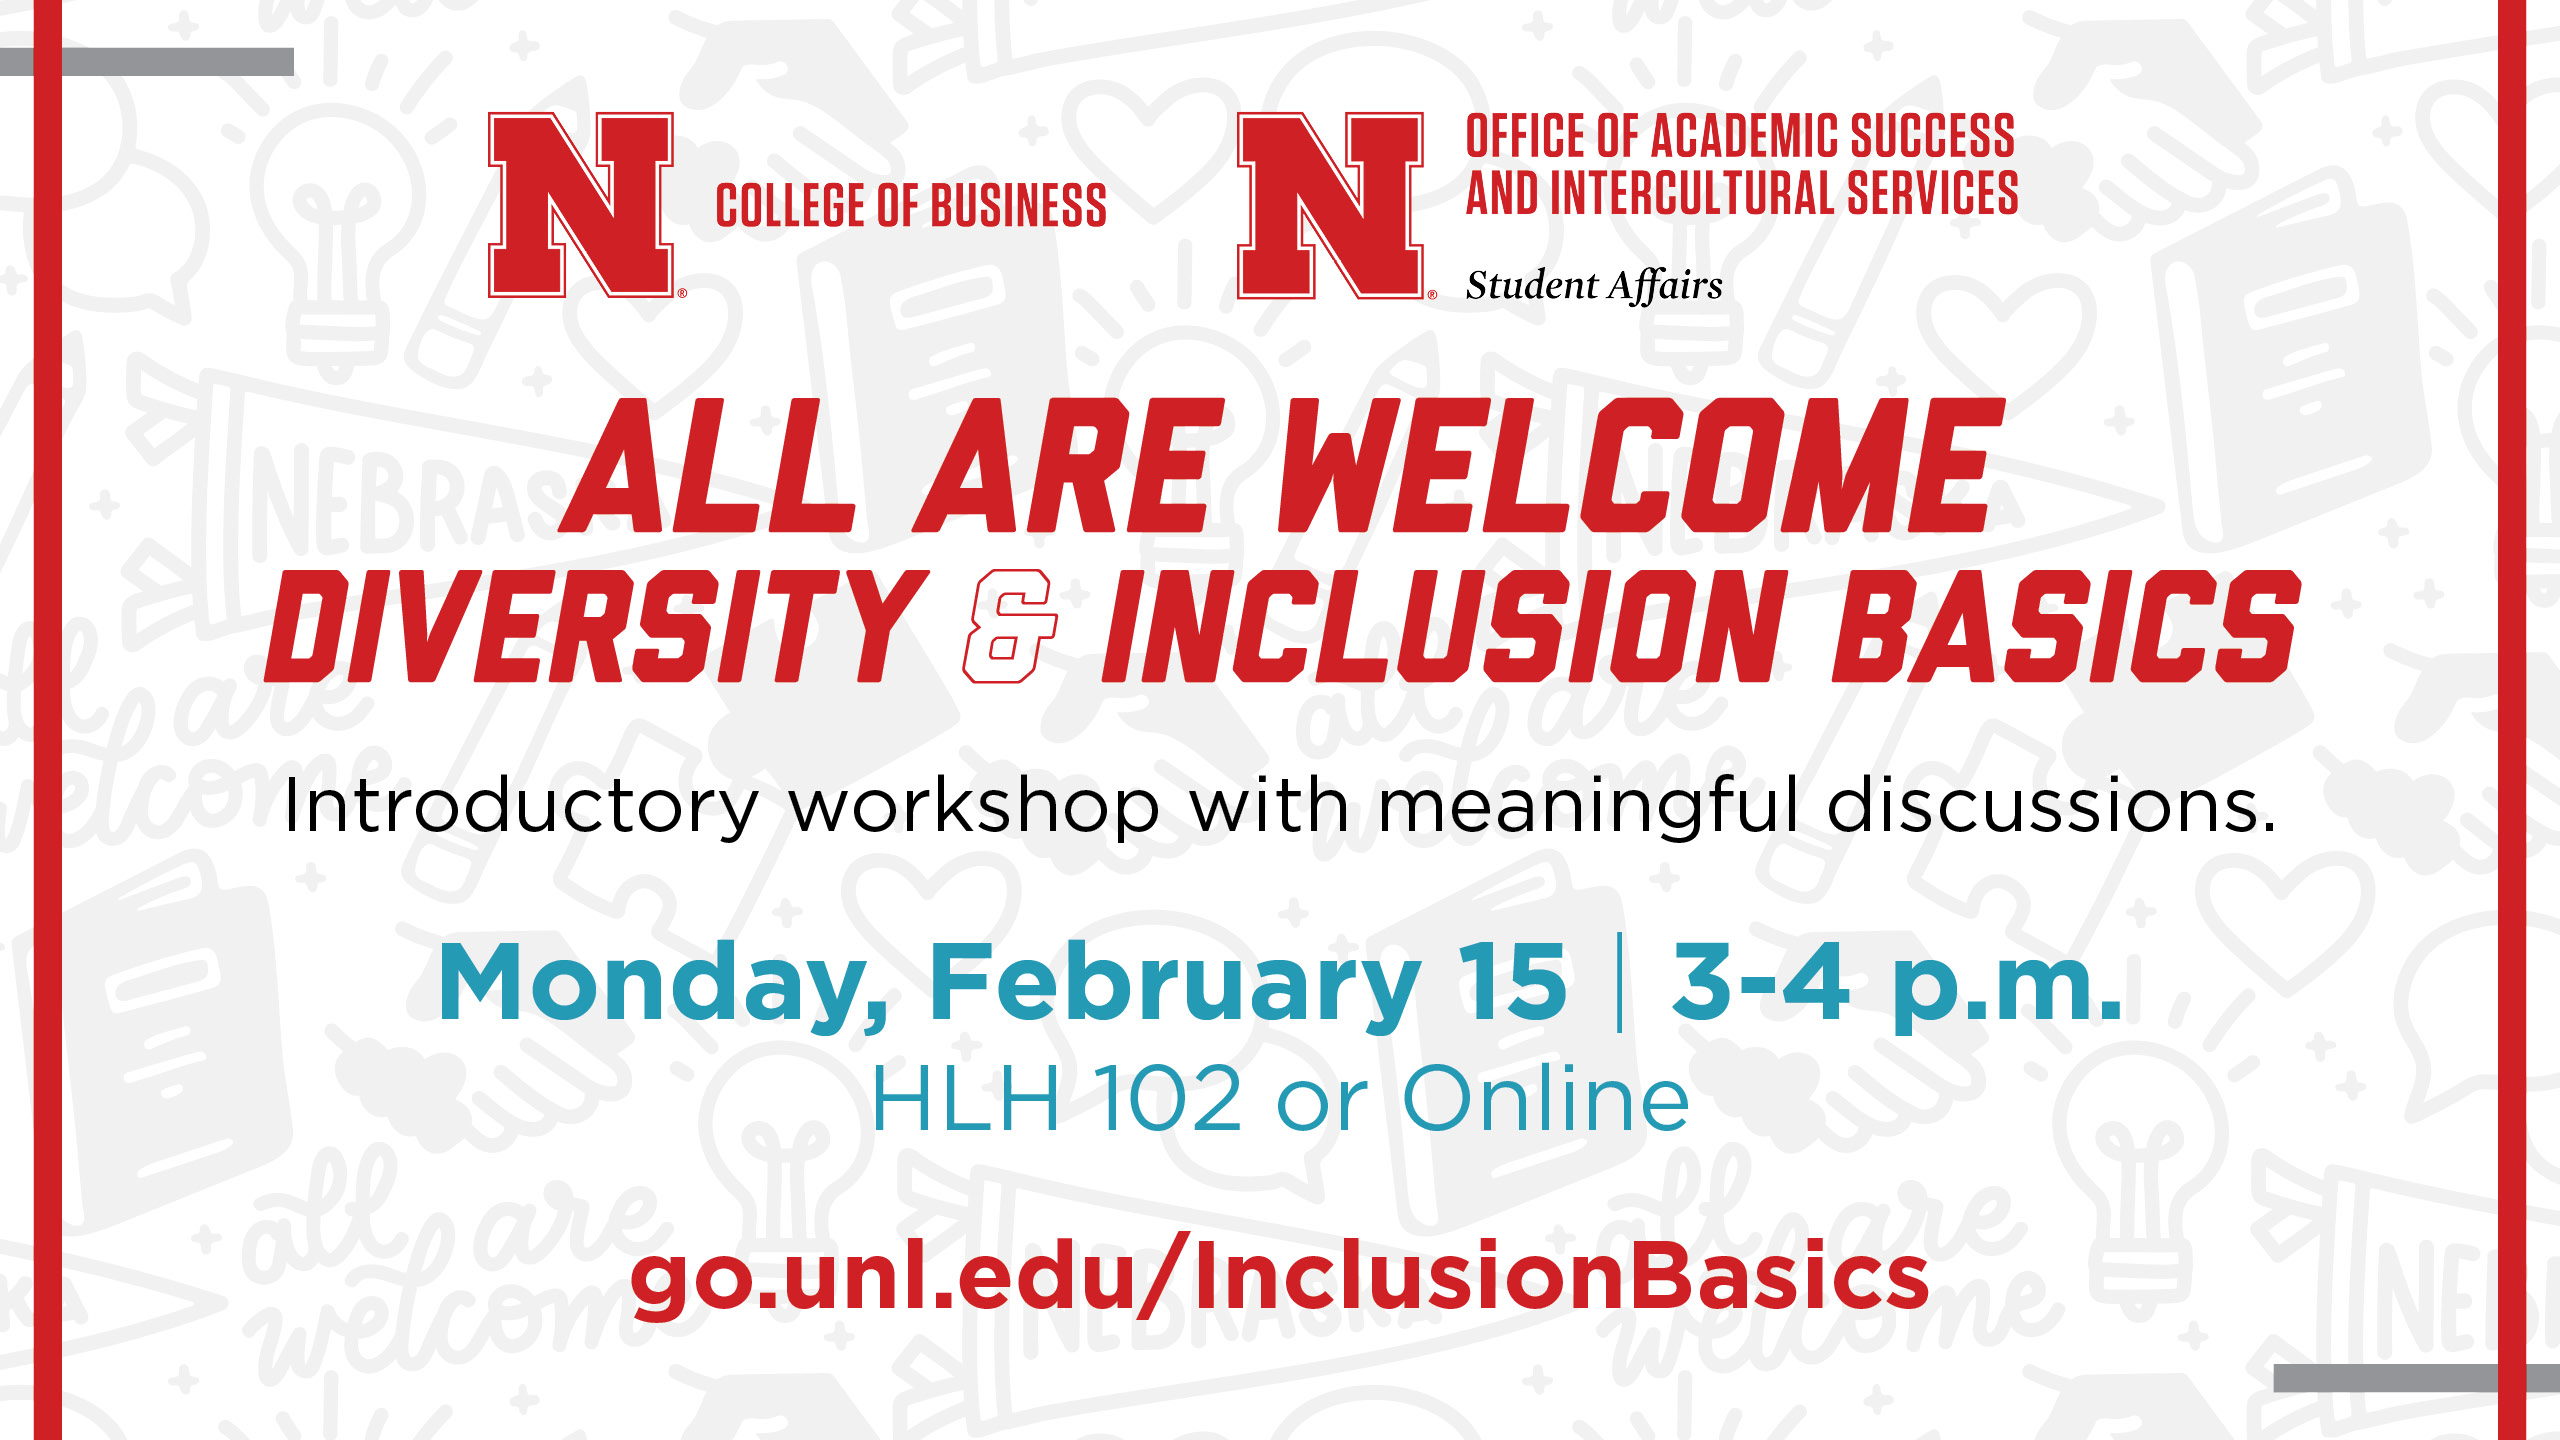 Diversity & Inclusion Basics | Monday Feburary 15 from 3-4 p.m